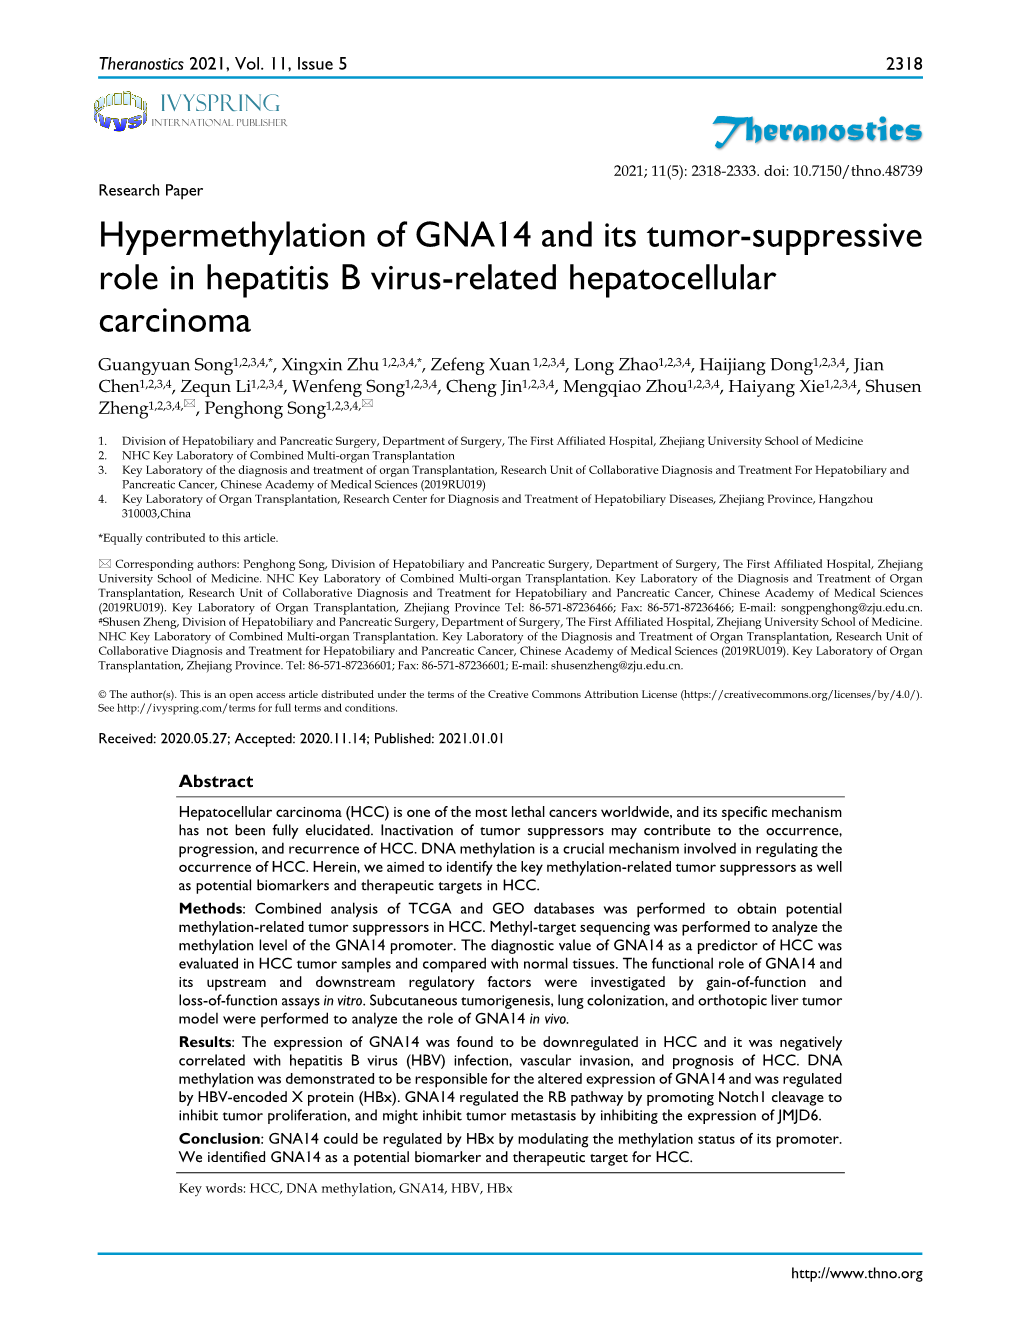 Theranostics Hypermethylation of GNA14 and Its Tumor-Suppressive